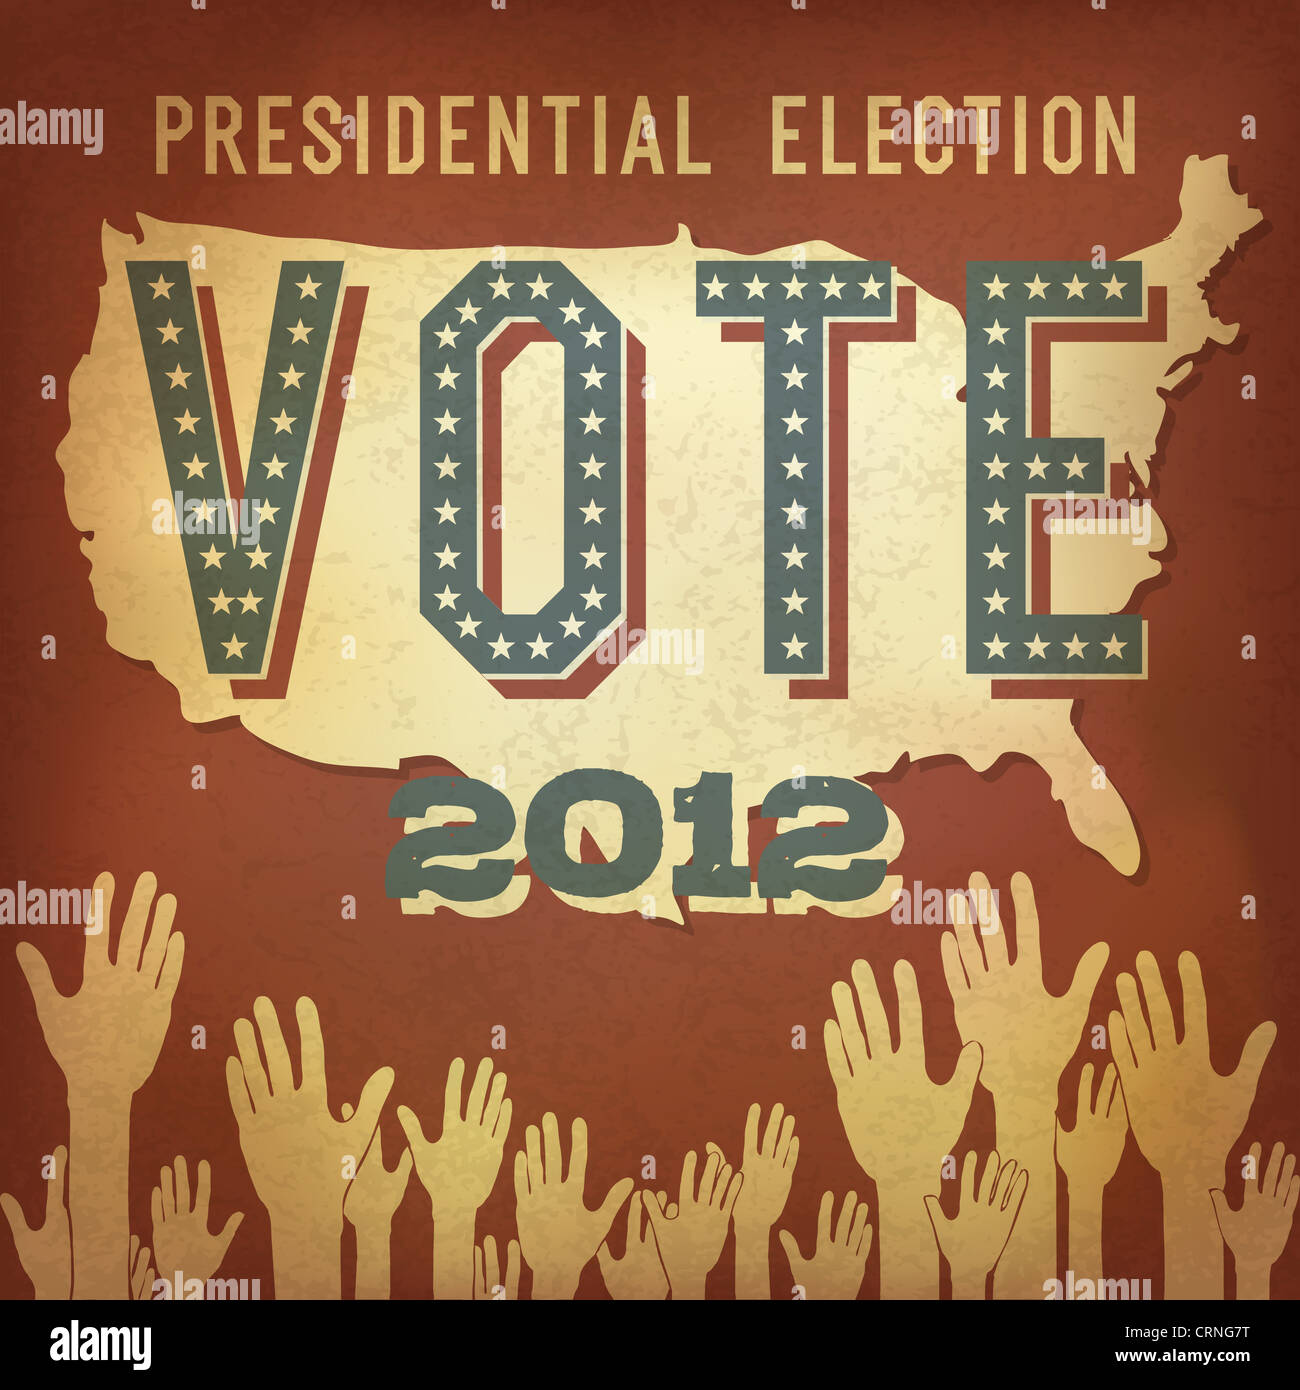 Presidential election 2012. Retro poster design Stock Photo